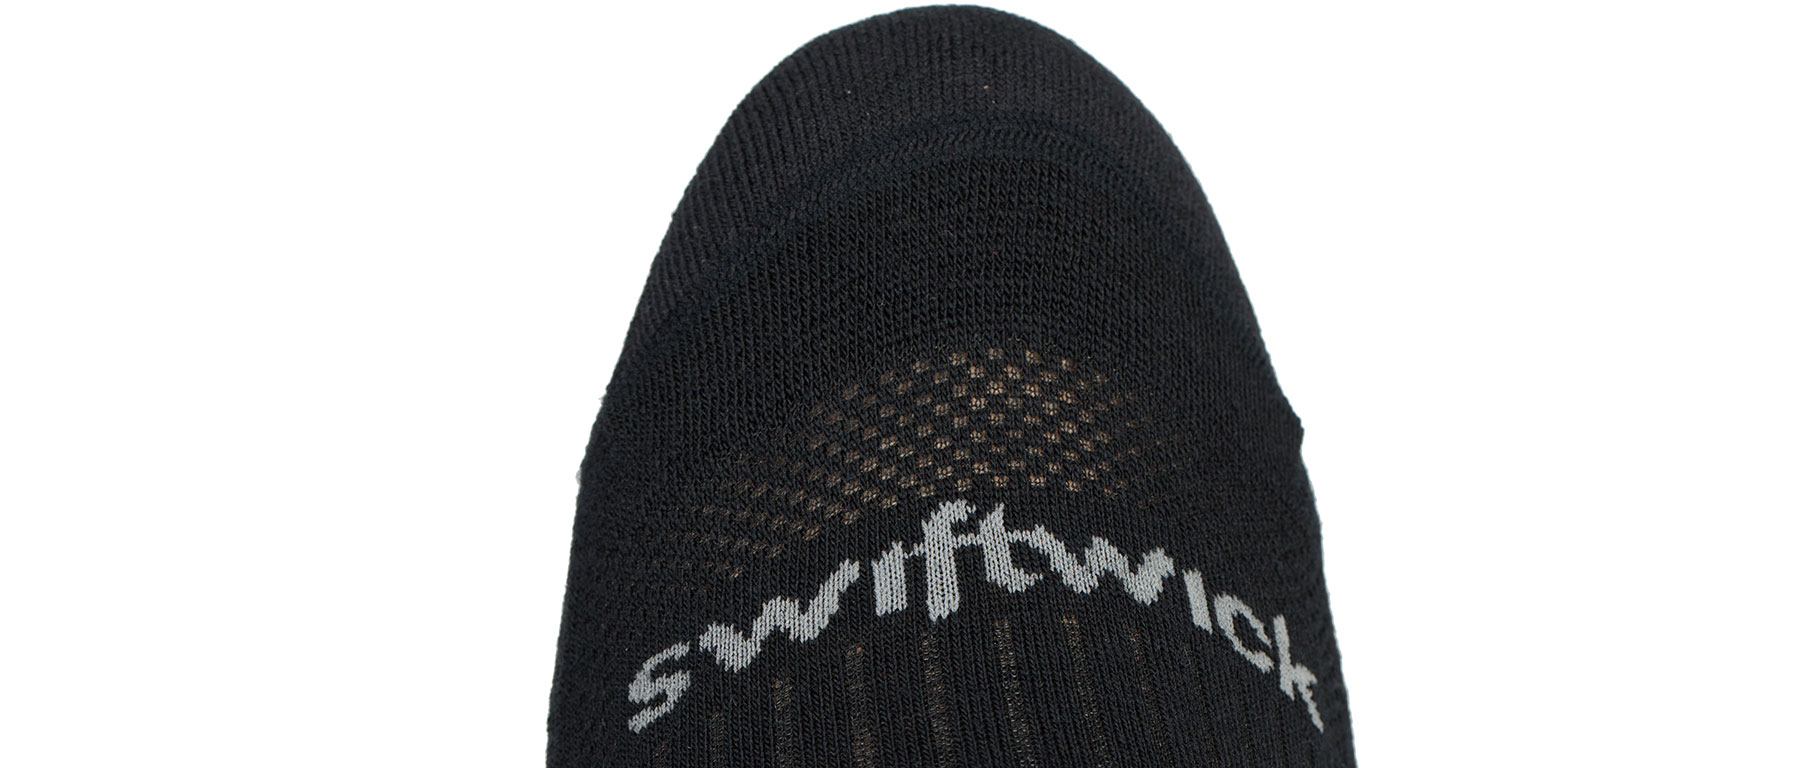 Swiftwick Pursuit Seven Socks